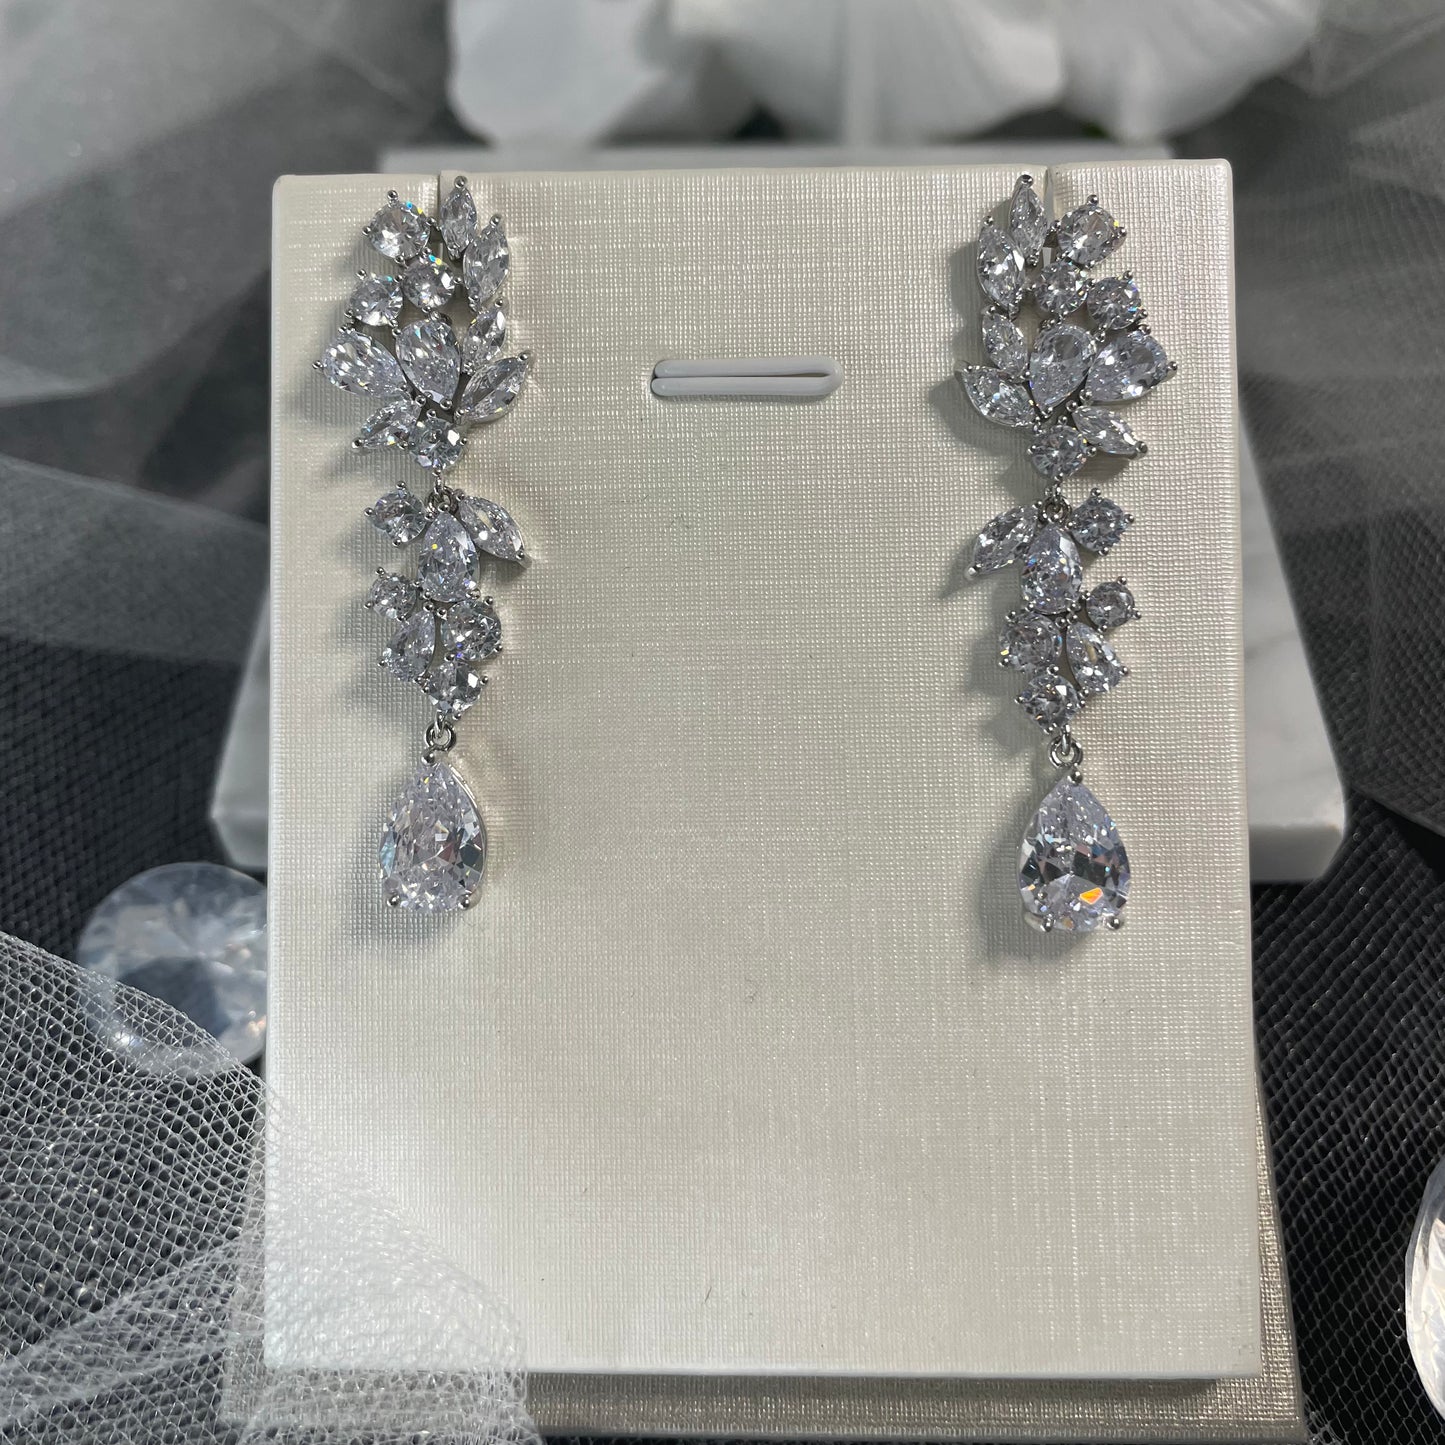 Sophisticated Hilda Bridal Earrings with Princess Cut Zircon Drops - Divine Bridal